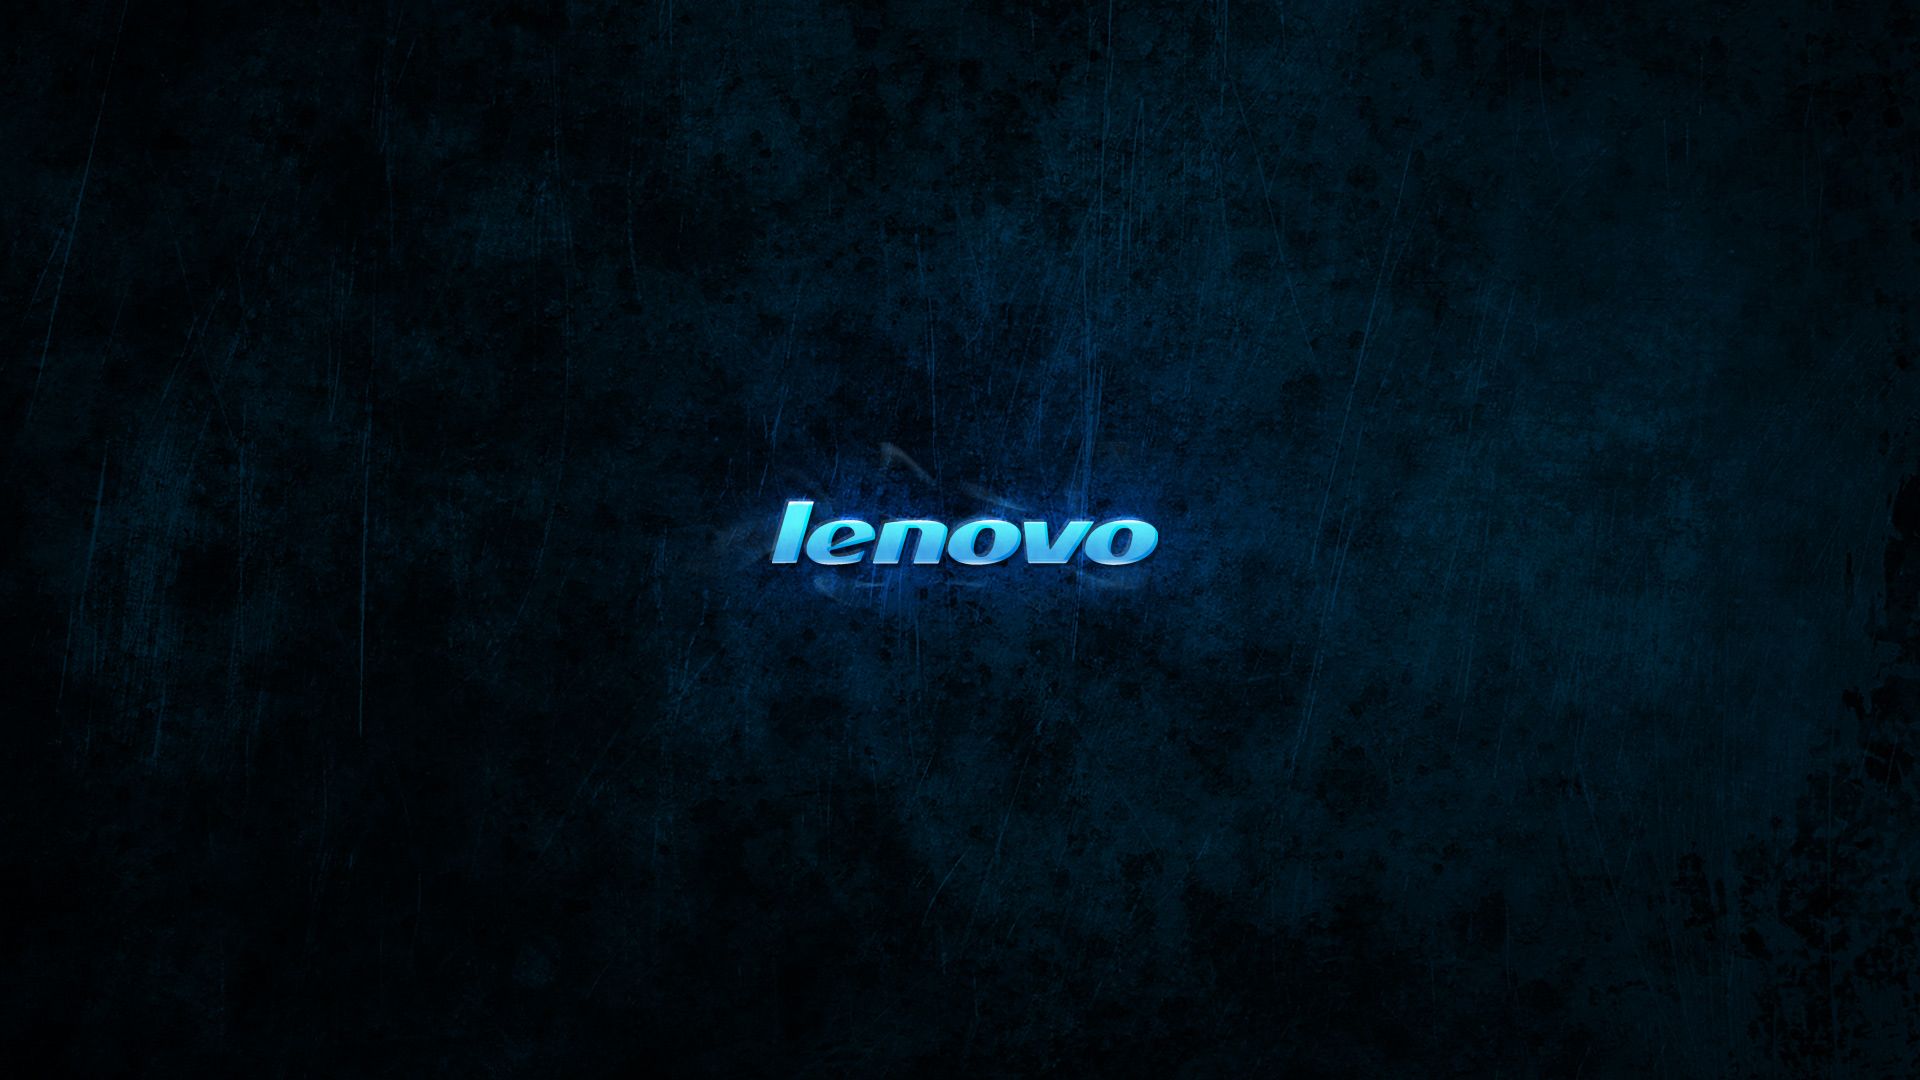 Lenovo Windows 8 Wallpapers